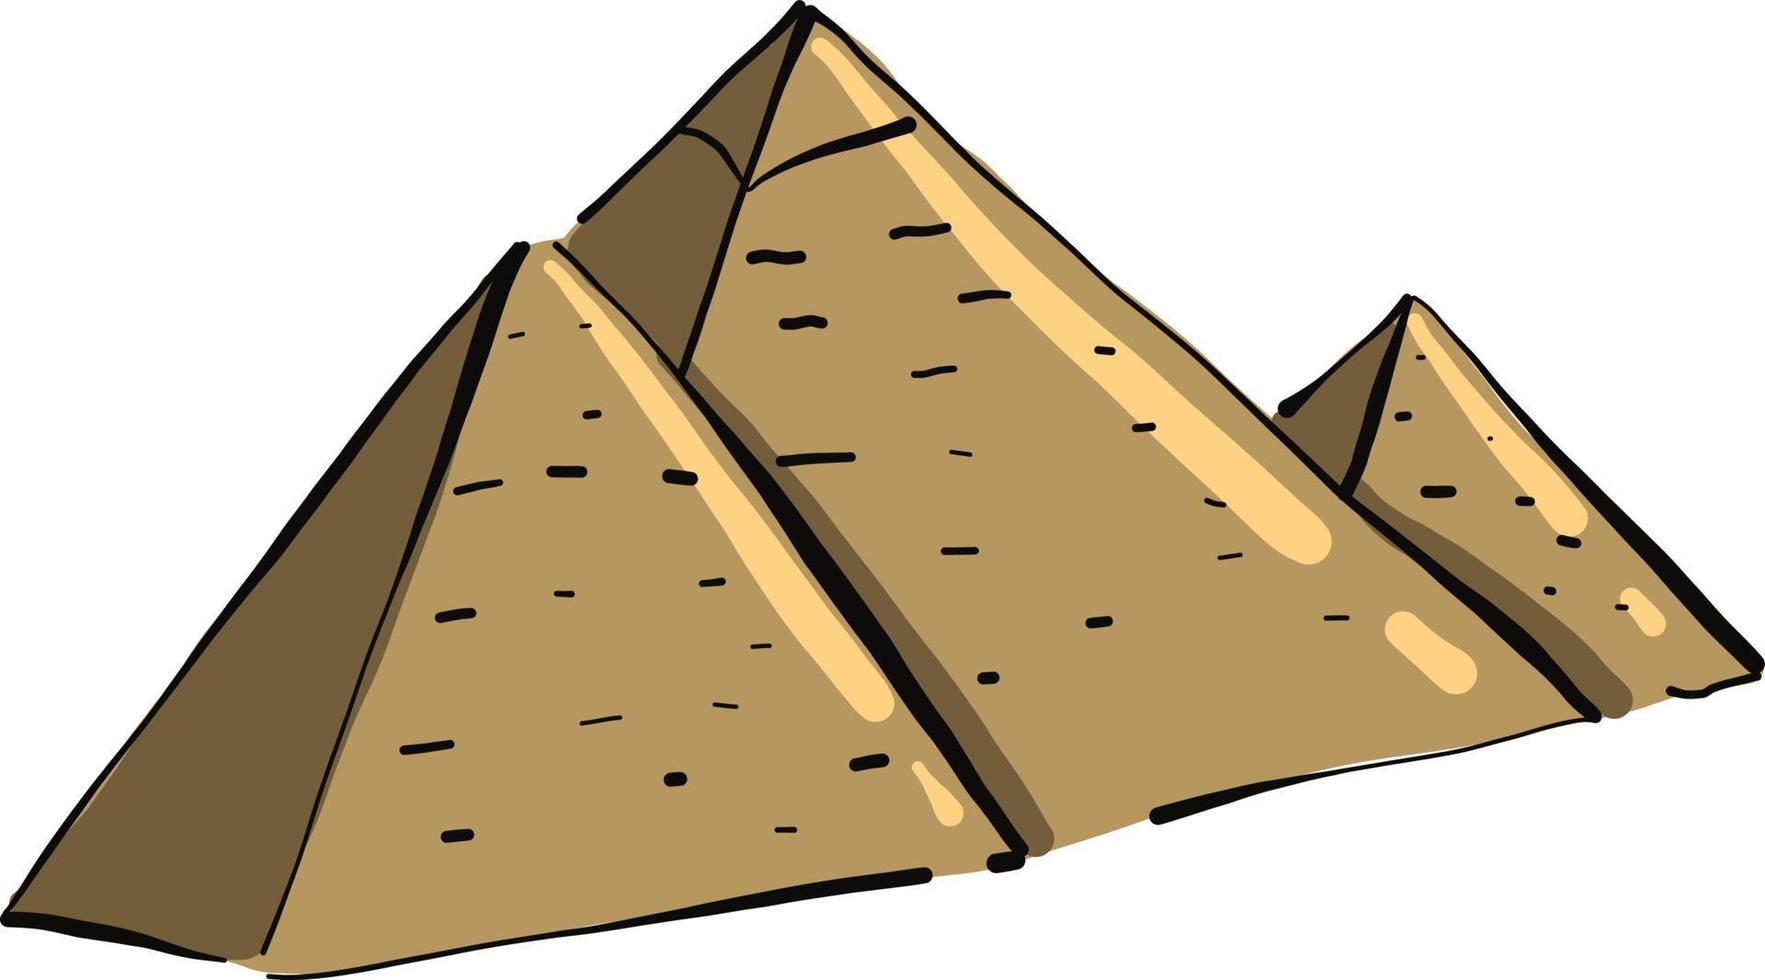 Three pyramids, illustration, vector on white background.